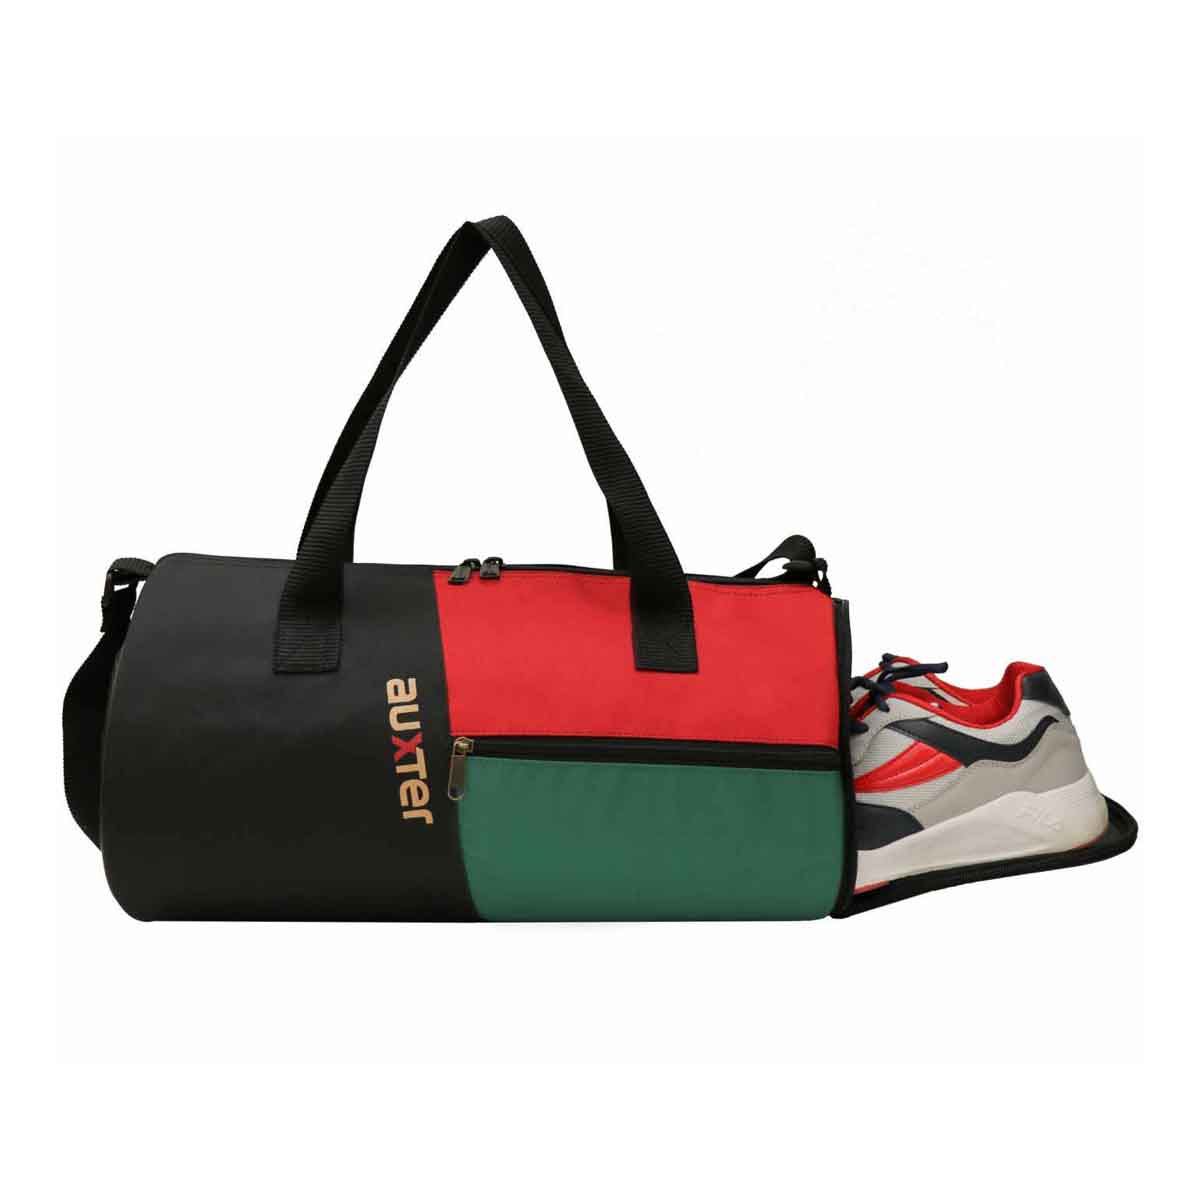 Auxter Premium Black / Green Sports Duffel Gym Bag with Shoe Compartment